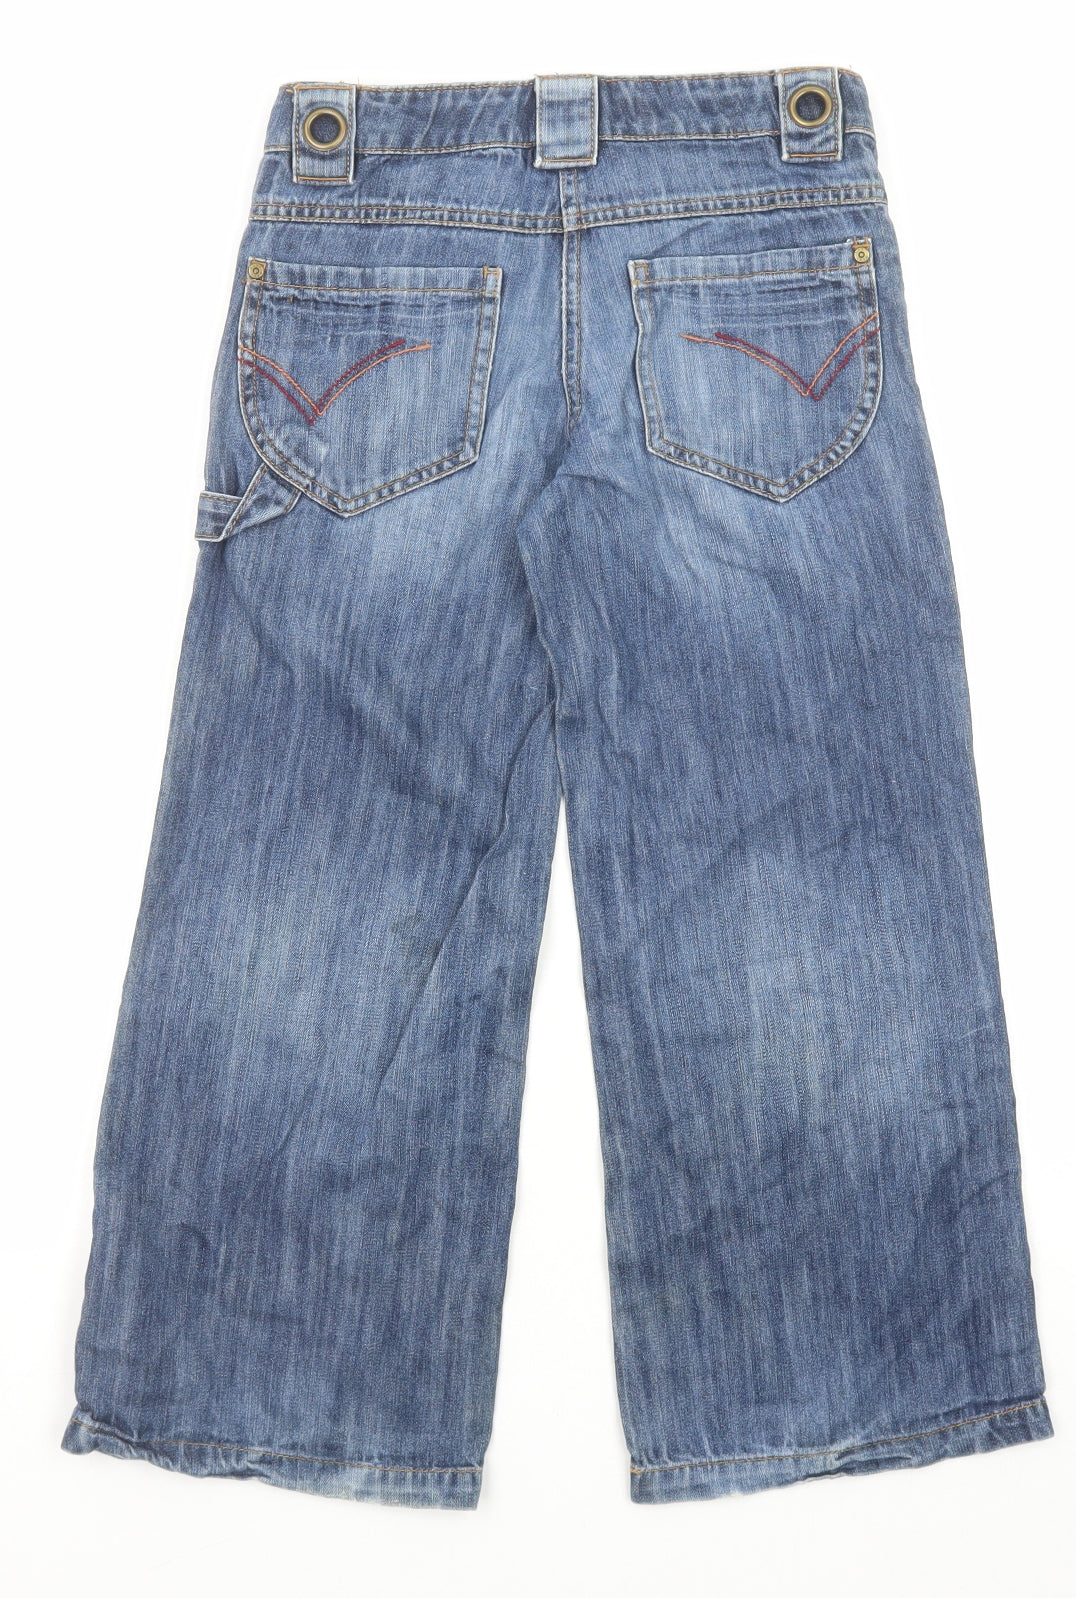 NEXT Boys Blue Cotton Wide-Leg Jeans Size 8 Years Regular Zip